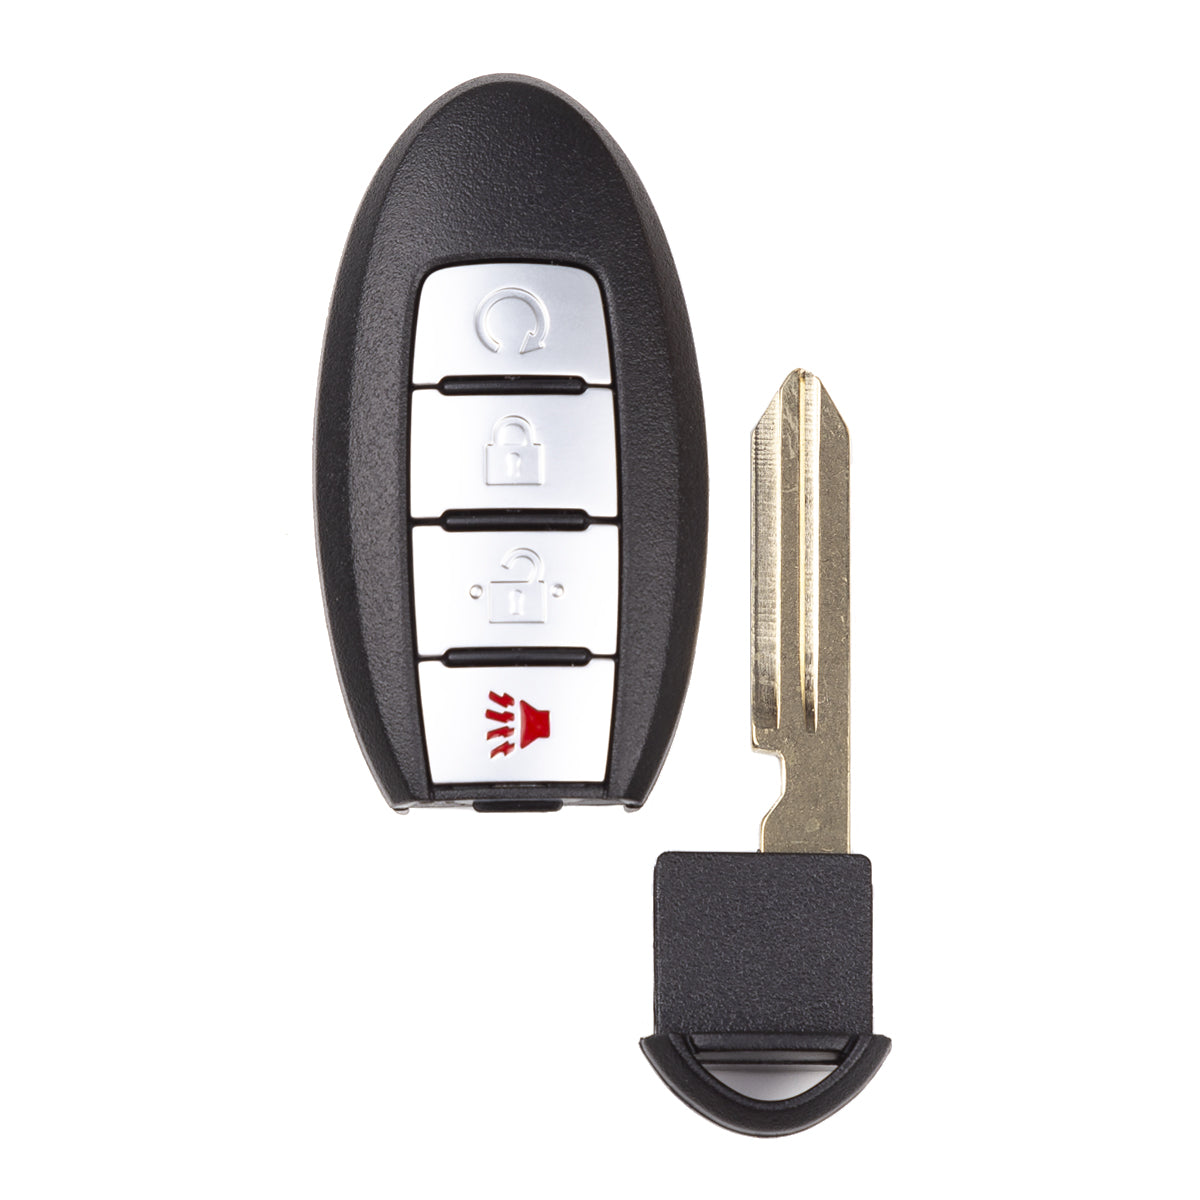 2017 Nissan Titan Smart Key w/ Remote Start 4 Buttons Fob FCC# KR5S180144014 - Aftermarket